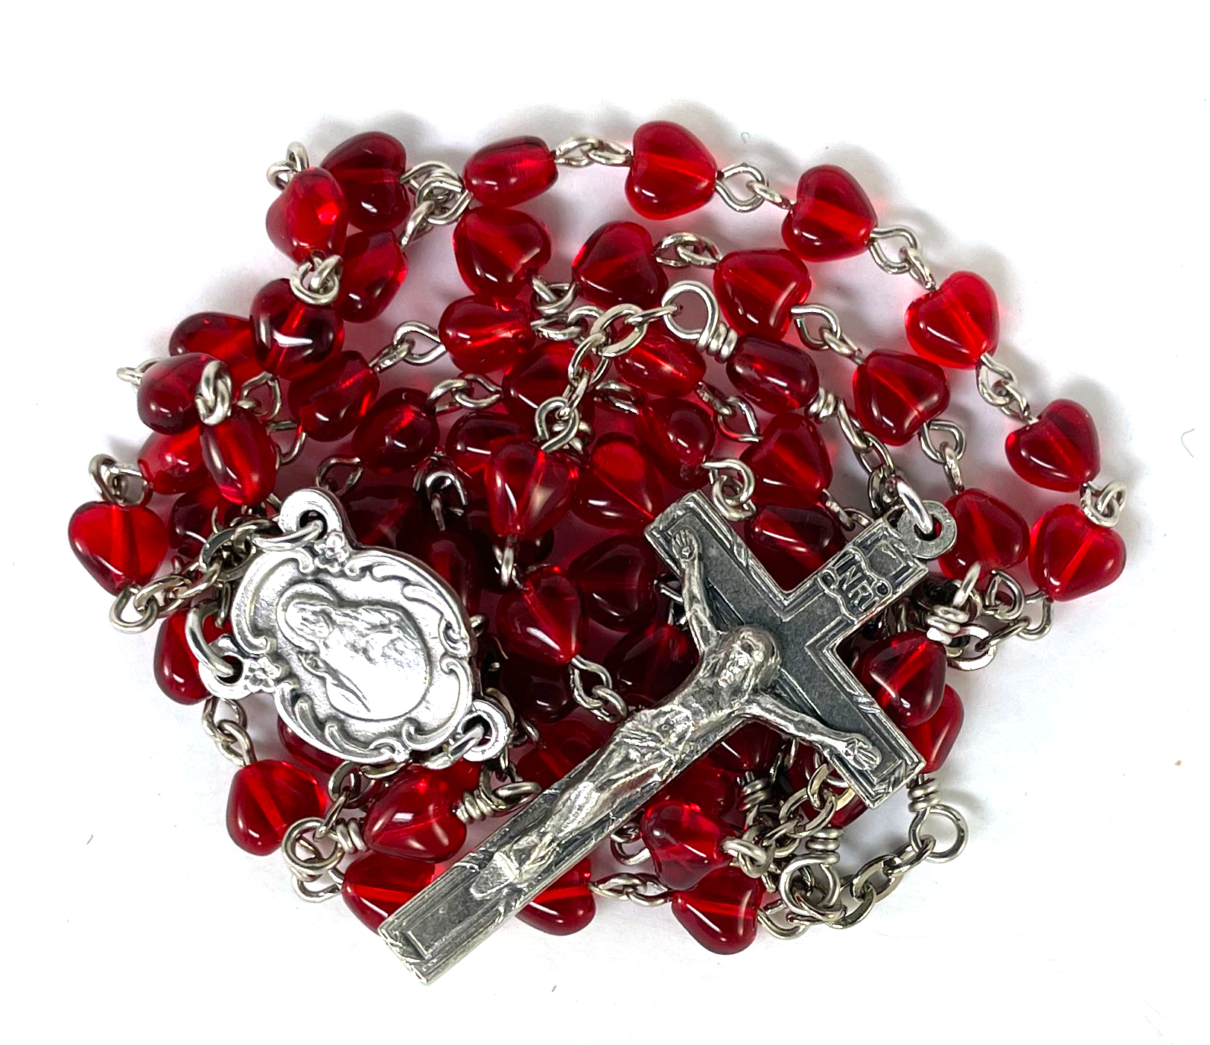 Sacred Heart of Jesus Items